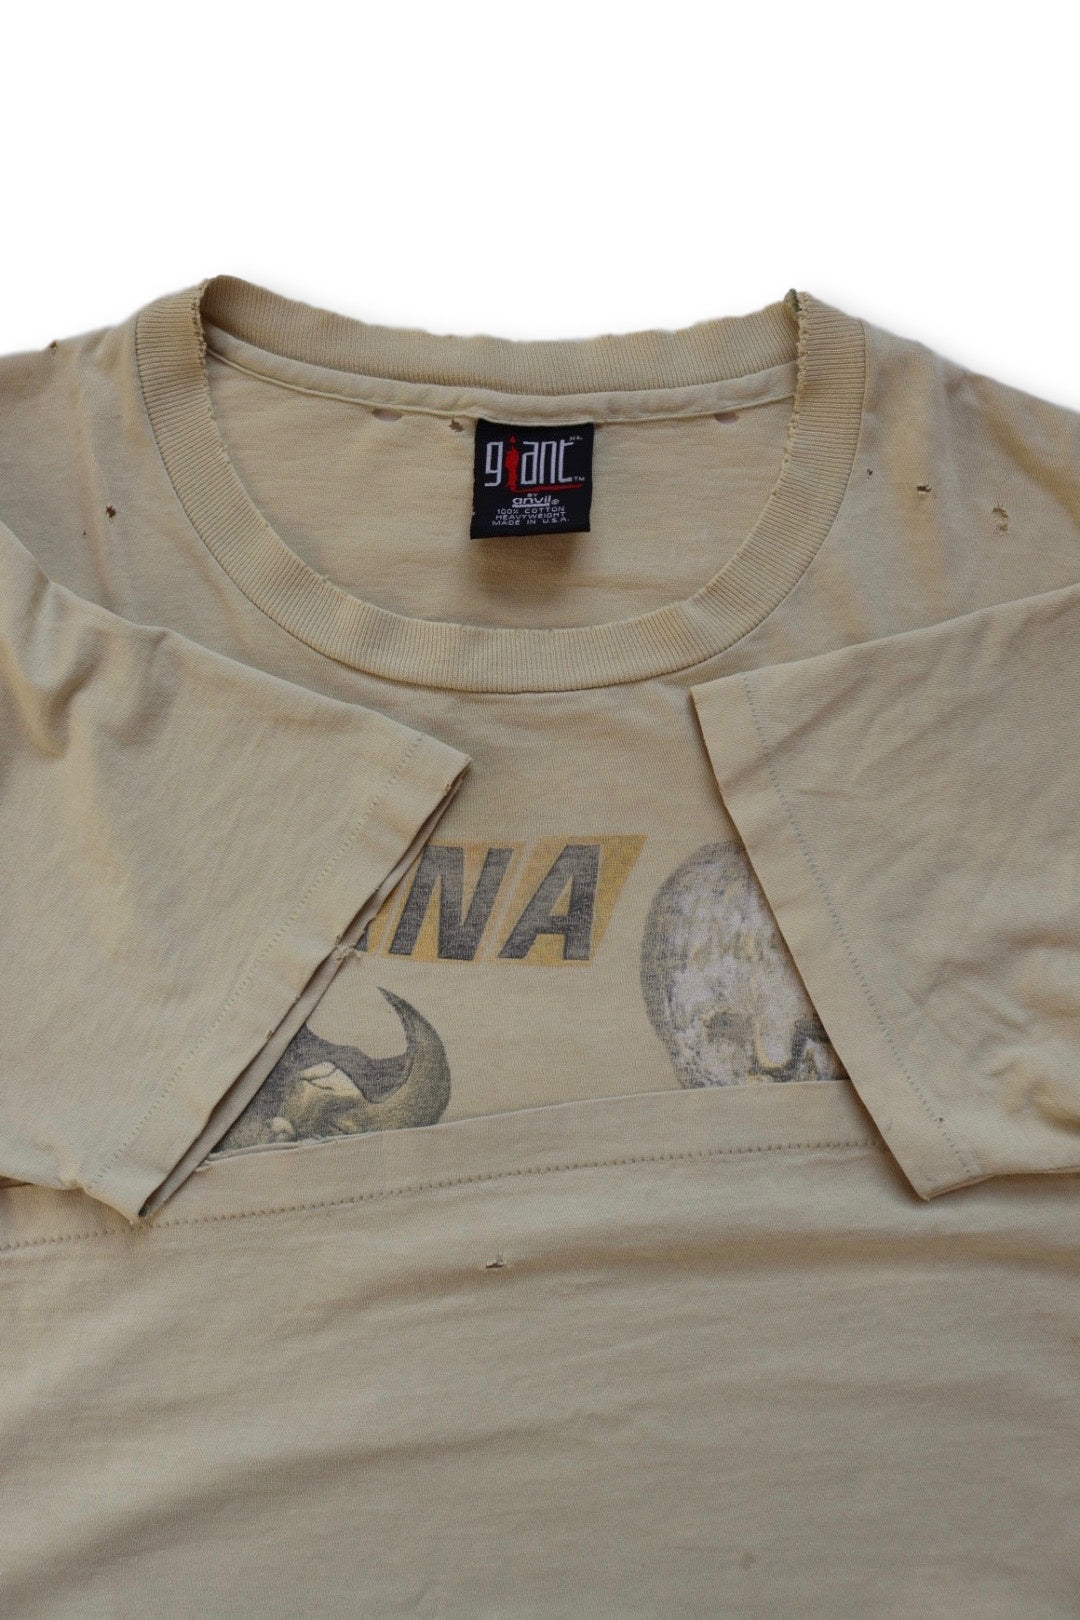 Nirvana Incesticide T-Shirt (1992)